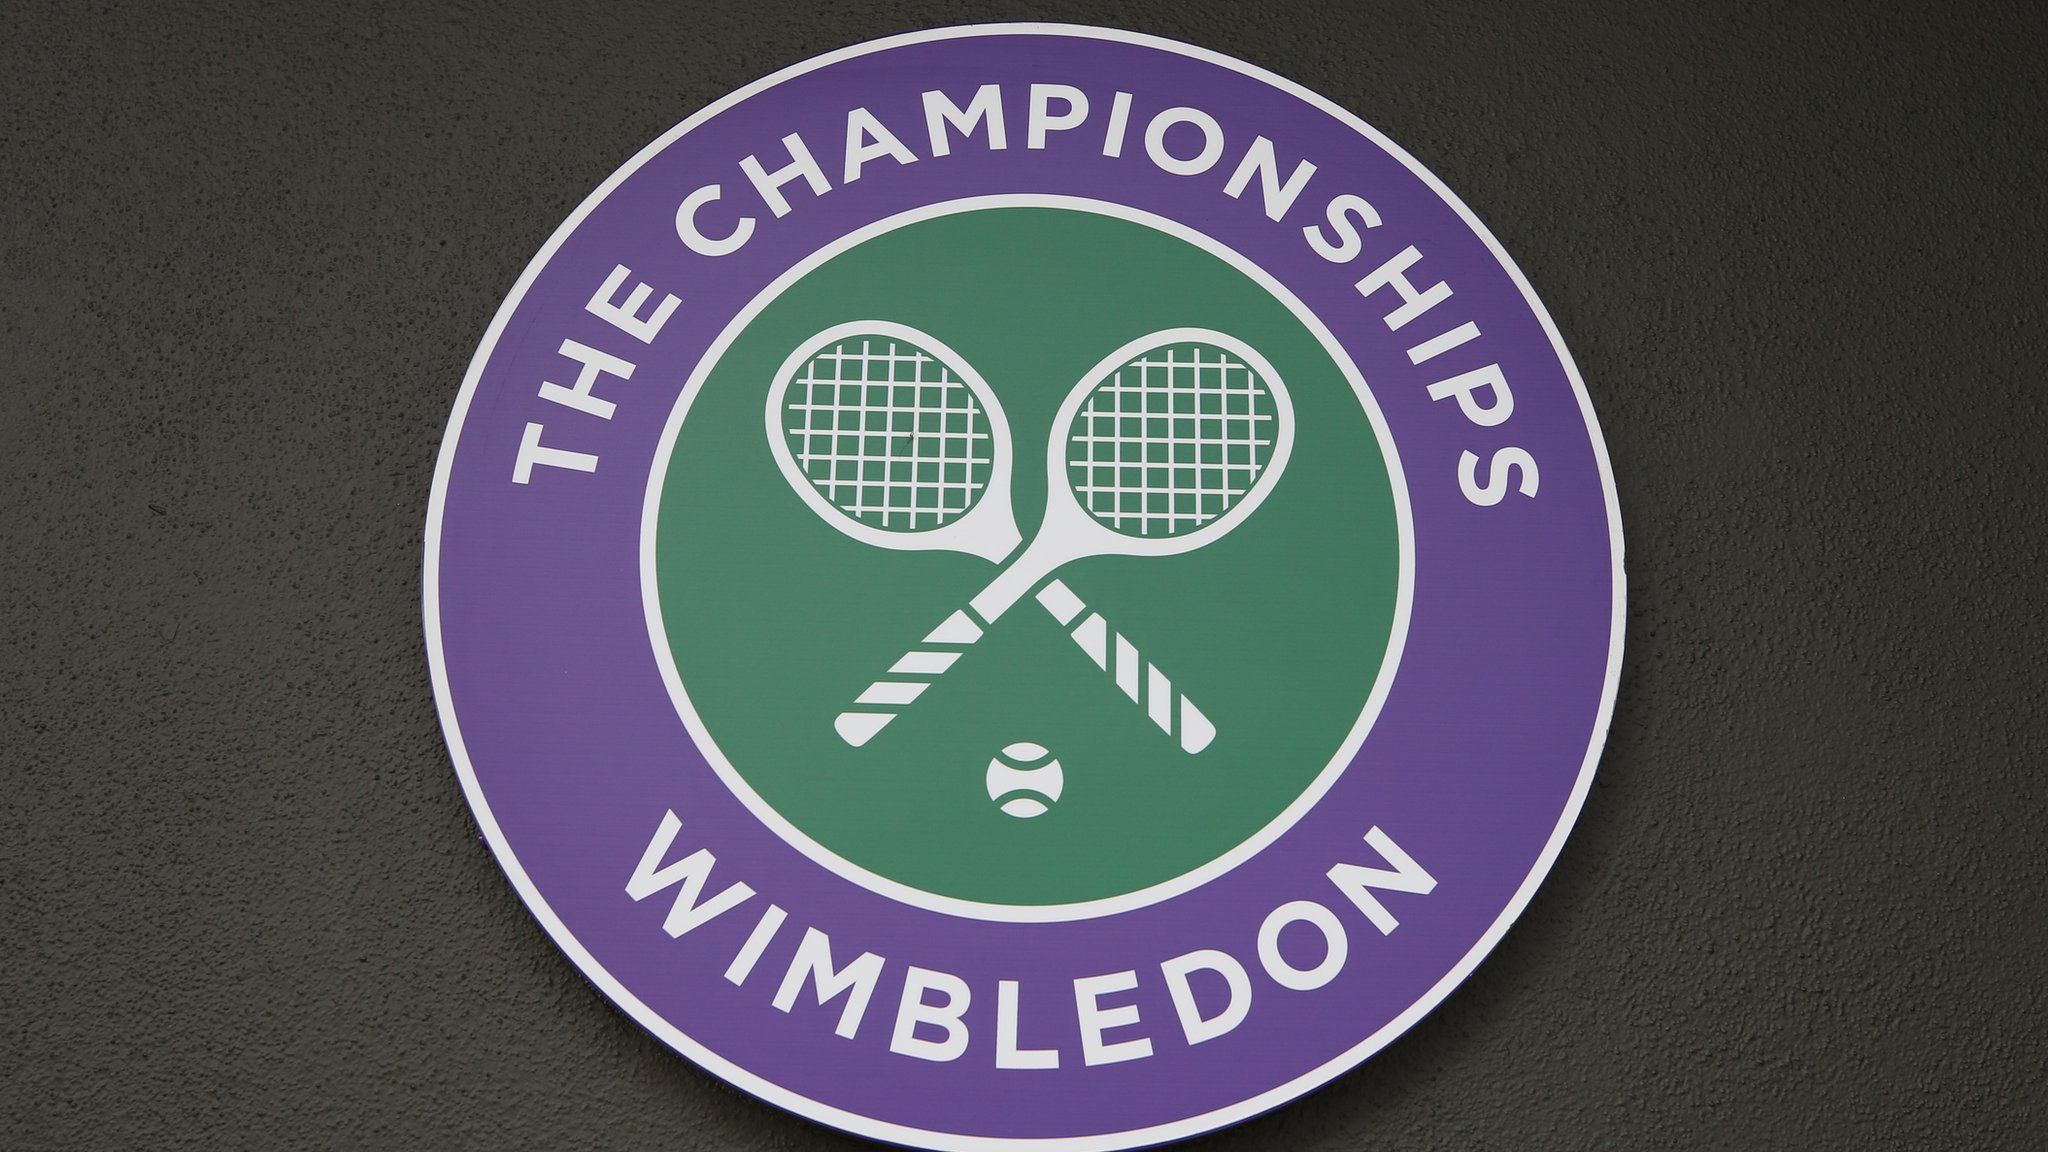 Angelique Kerber beats Serena Williams to win Wimbledon - BBC Sport